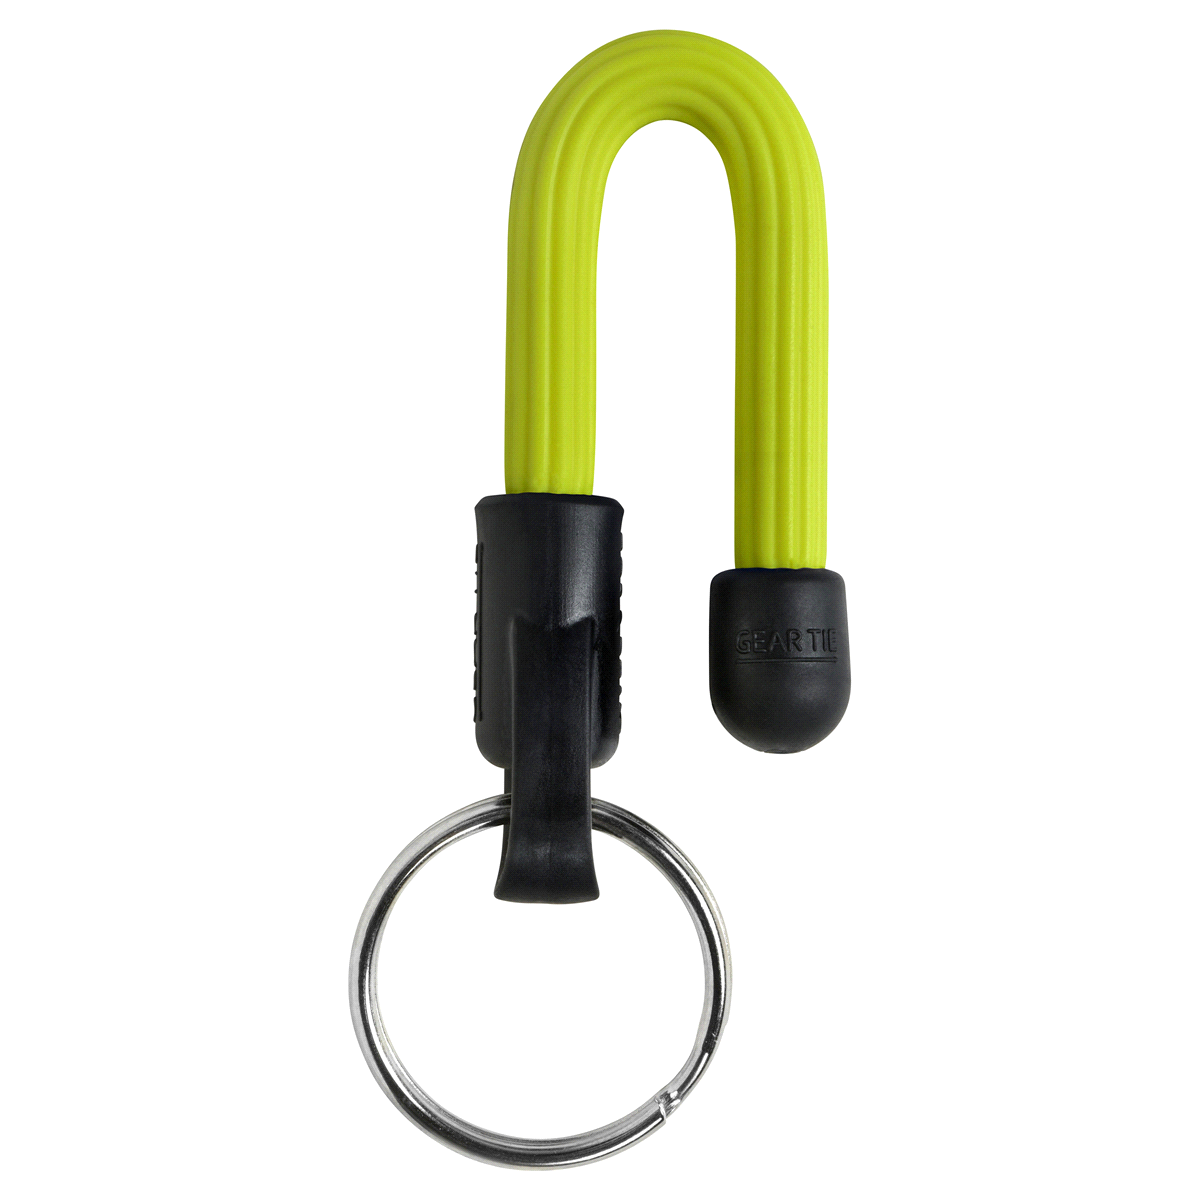 slide 3 of 3, Gear Tie Key Ring - Neon Yellow, 1 ct